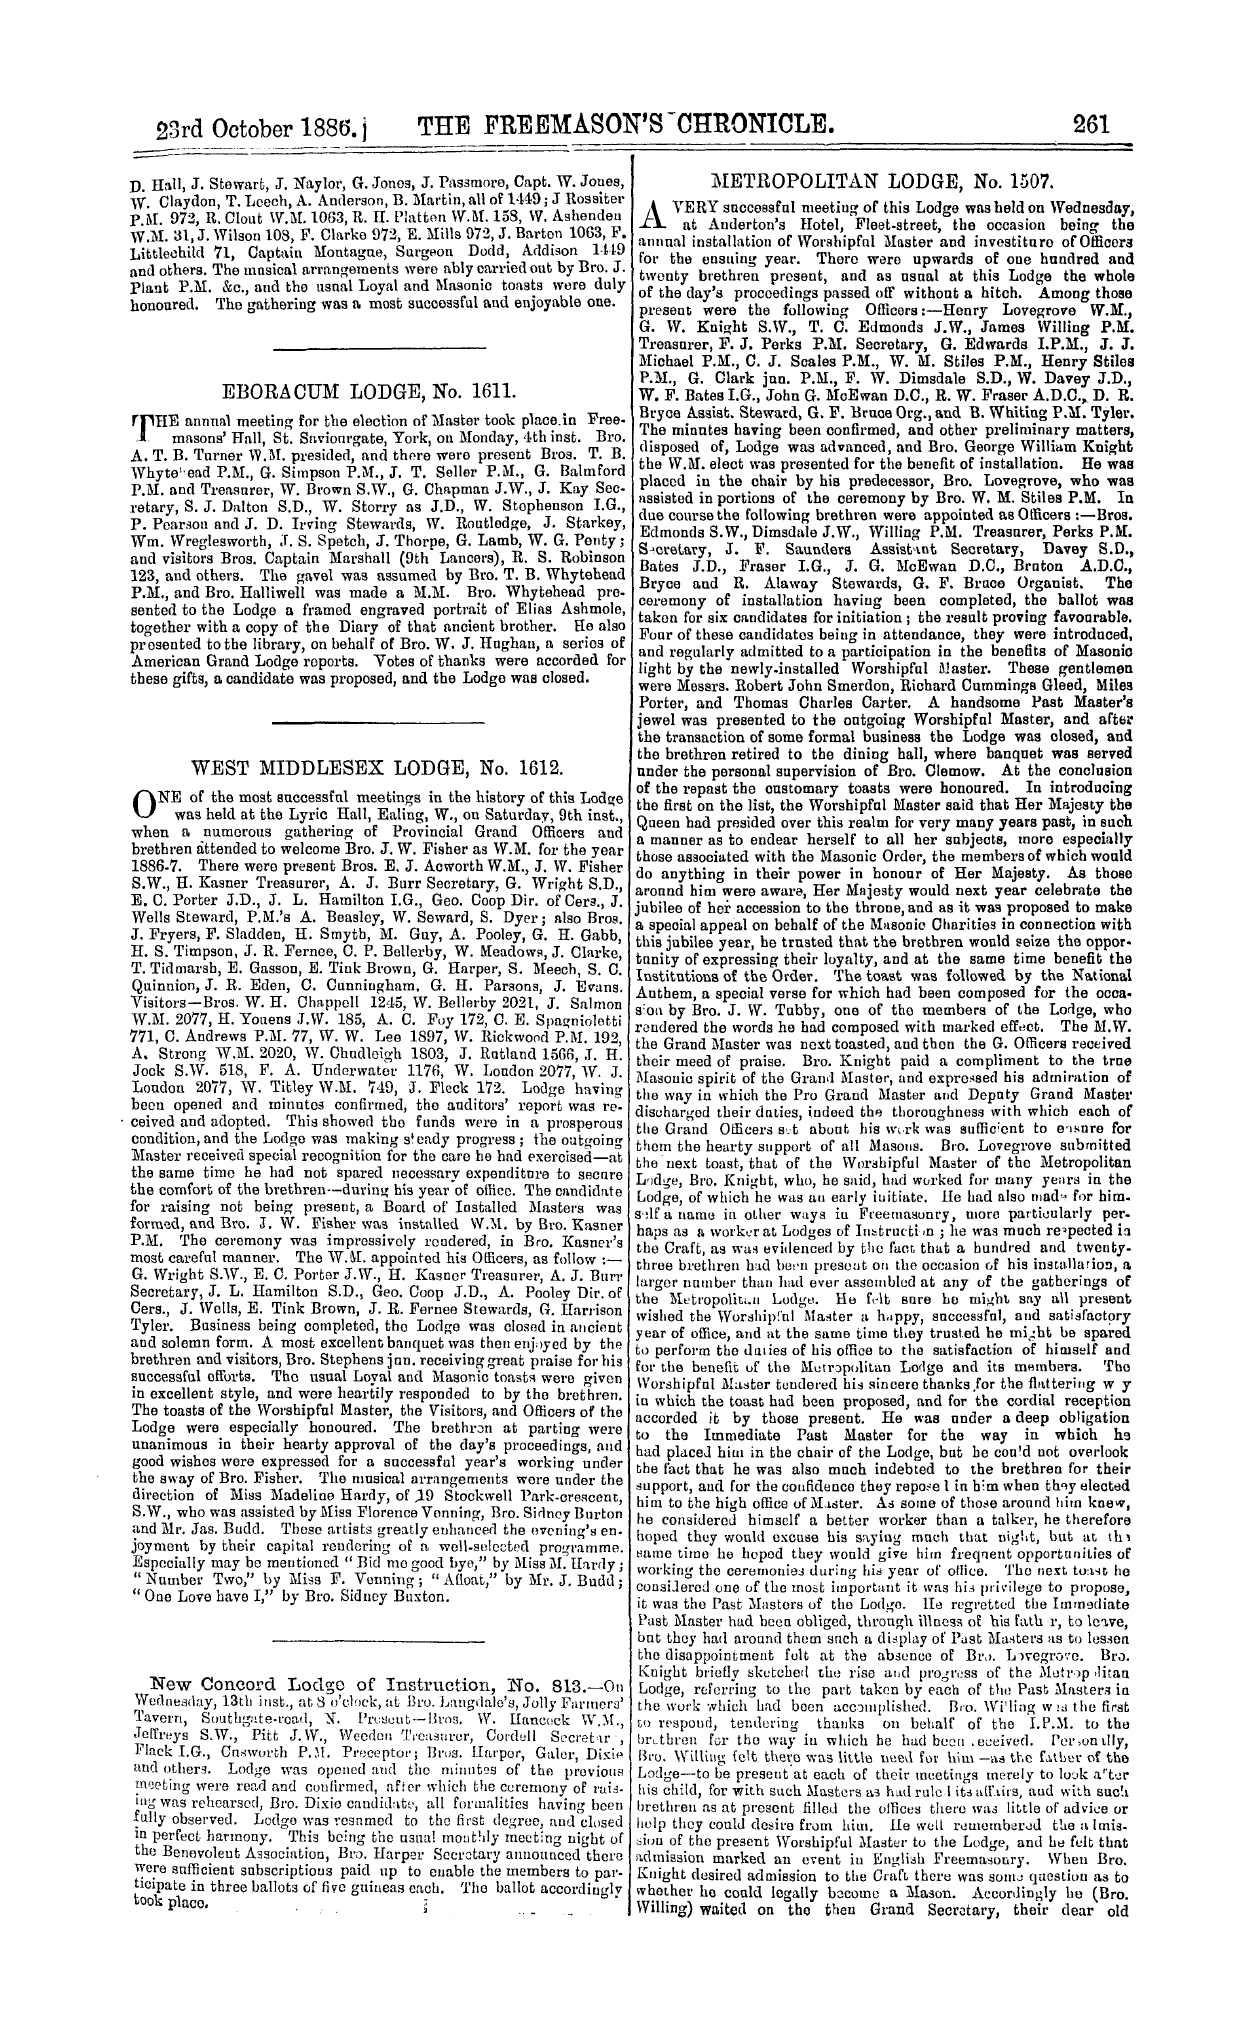 The Freemason's Chronicle: 1886-10-23 - Metropolitan Lodge, No. 1507.